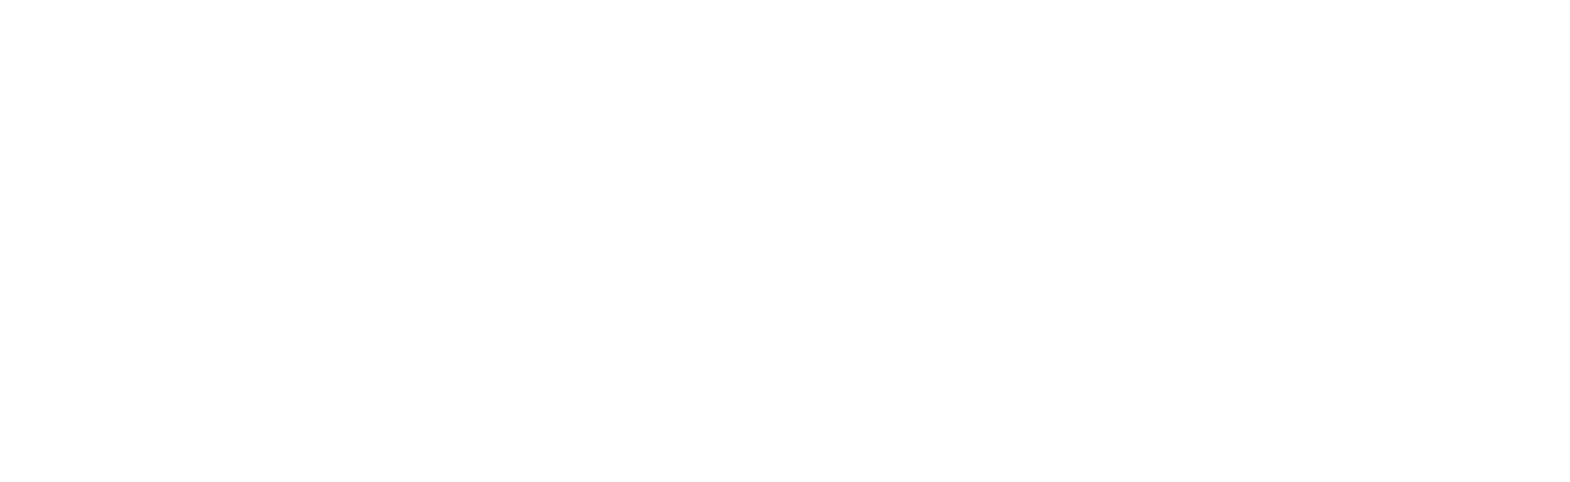 Campus Motorsport Hannover